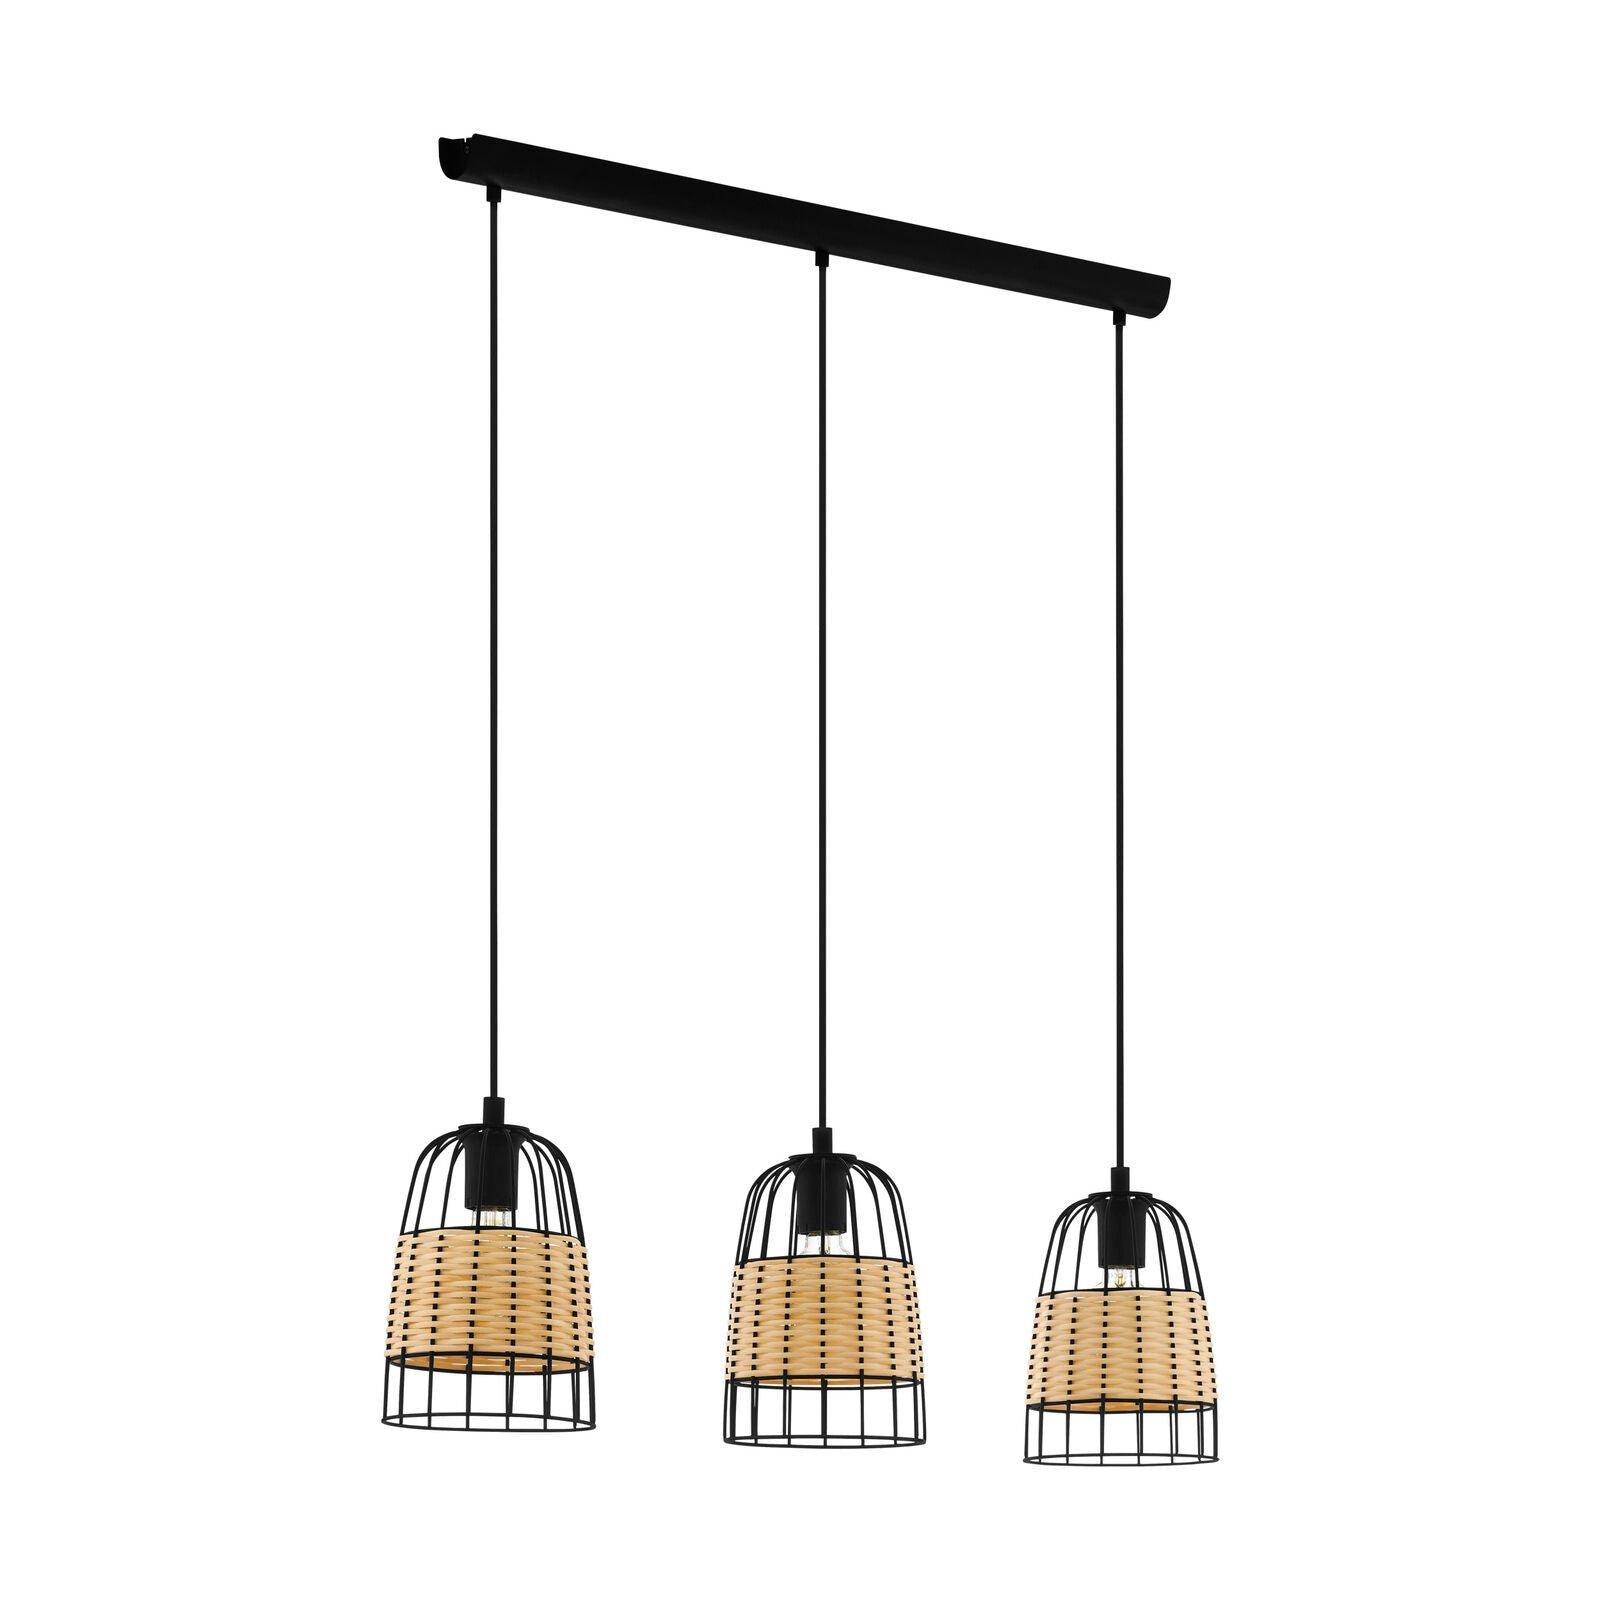 Hanging Ceiling Pendant Light Black & Wicker 3x 40W E27 Hallway Feature Lamp